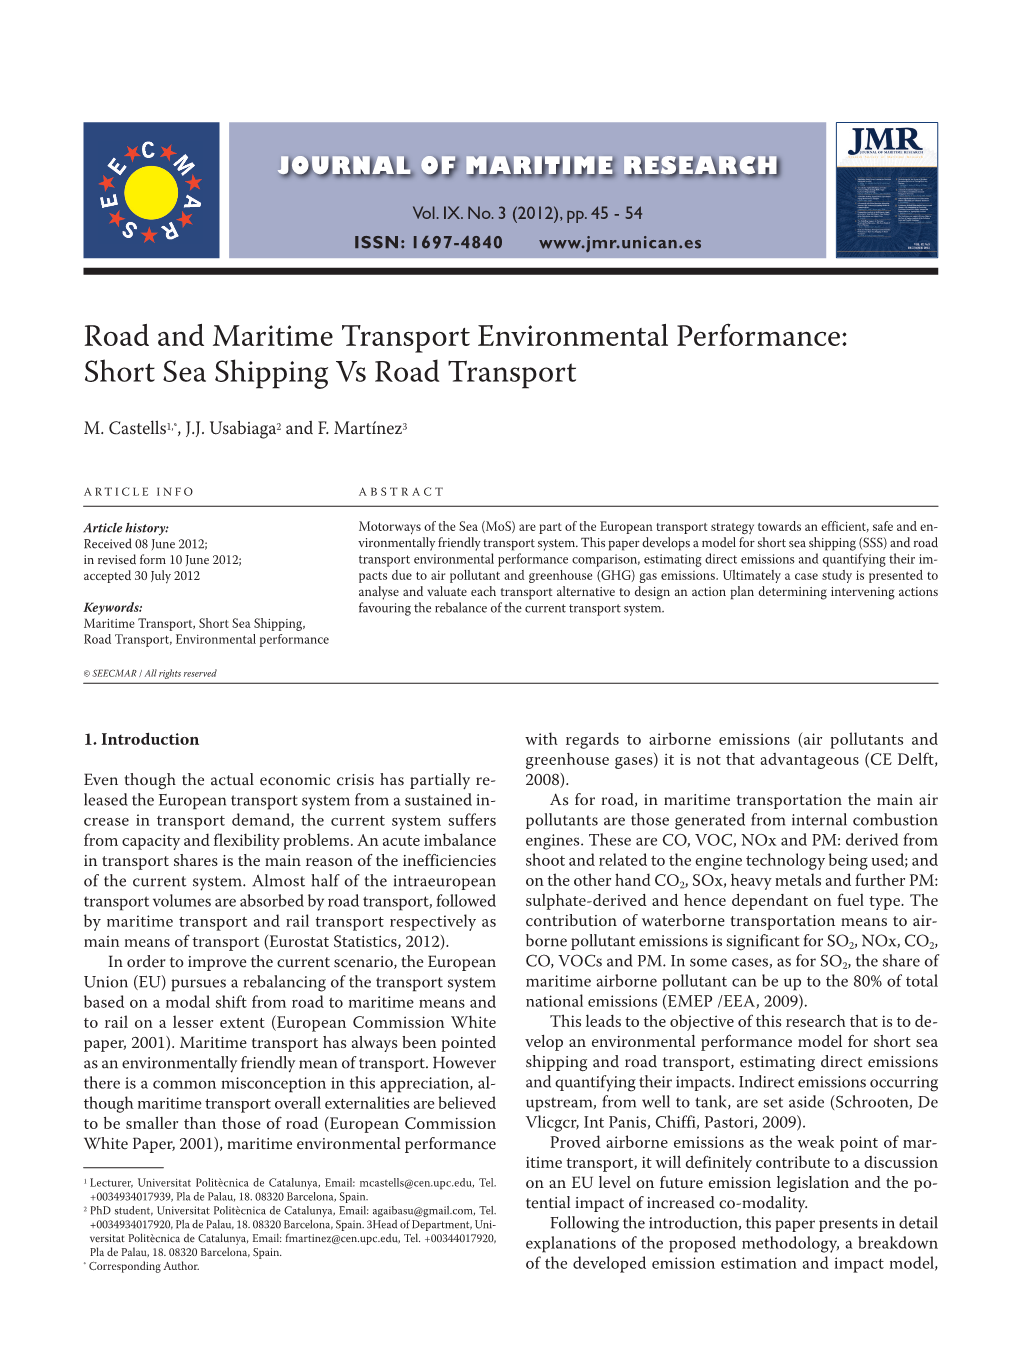 Road and Maritime Transport Environmental Performance: Short Sea Shipping Vs Road Transport